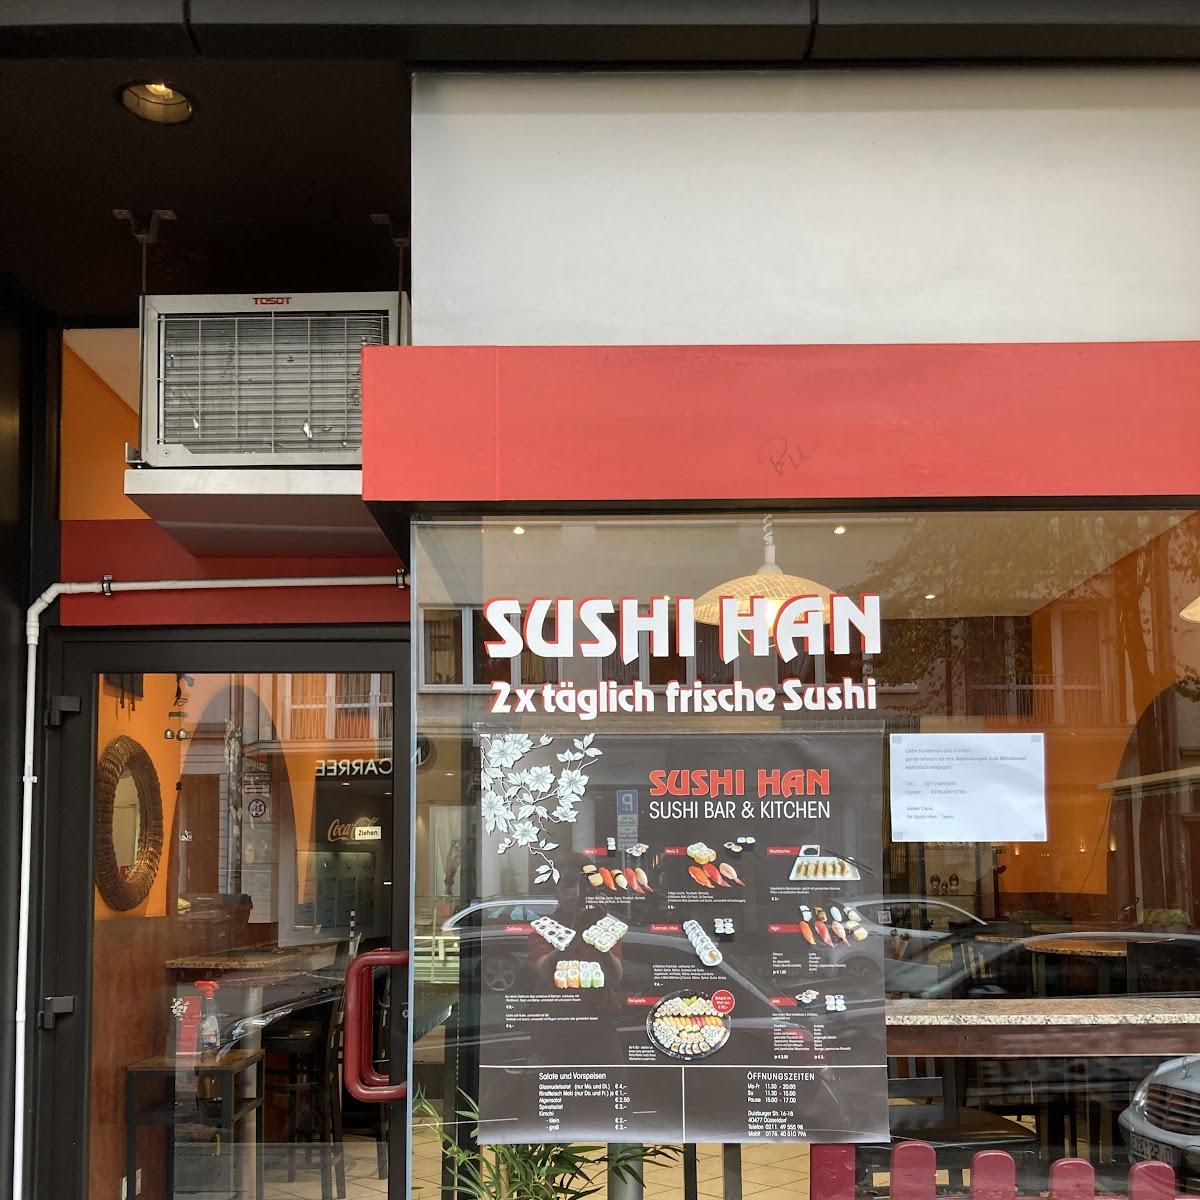 Restaurant "Sushi Han" in Düsseldorf